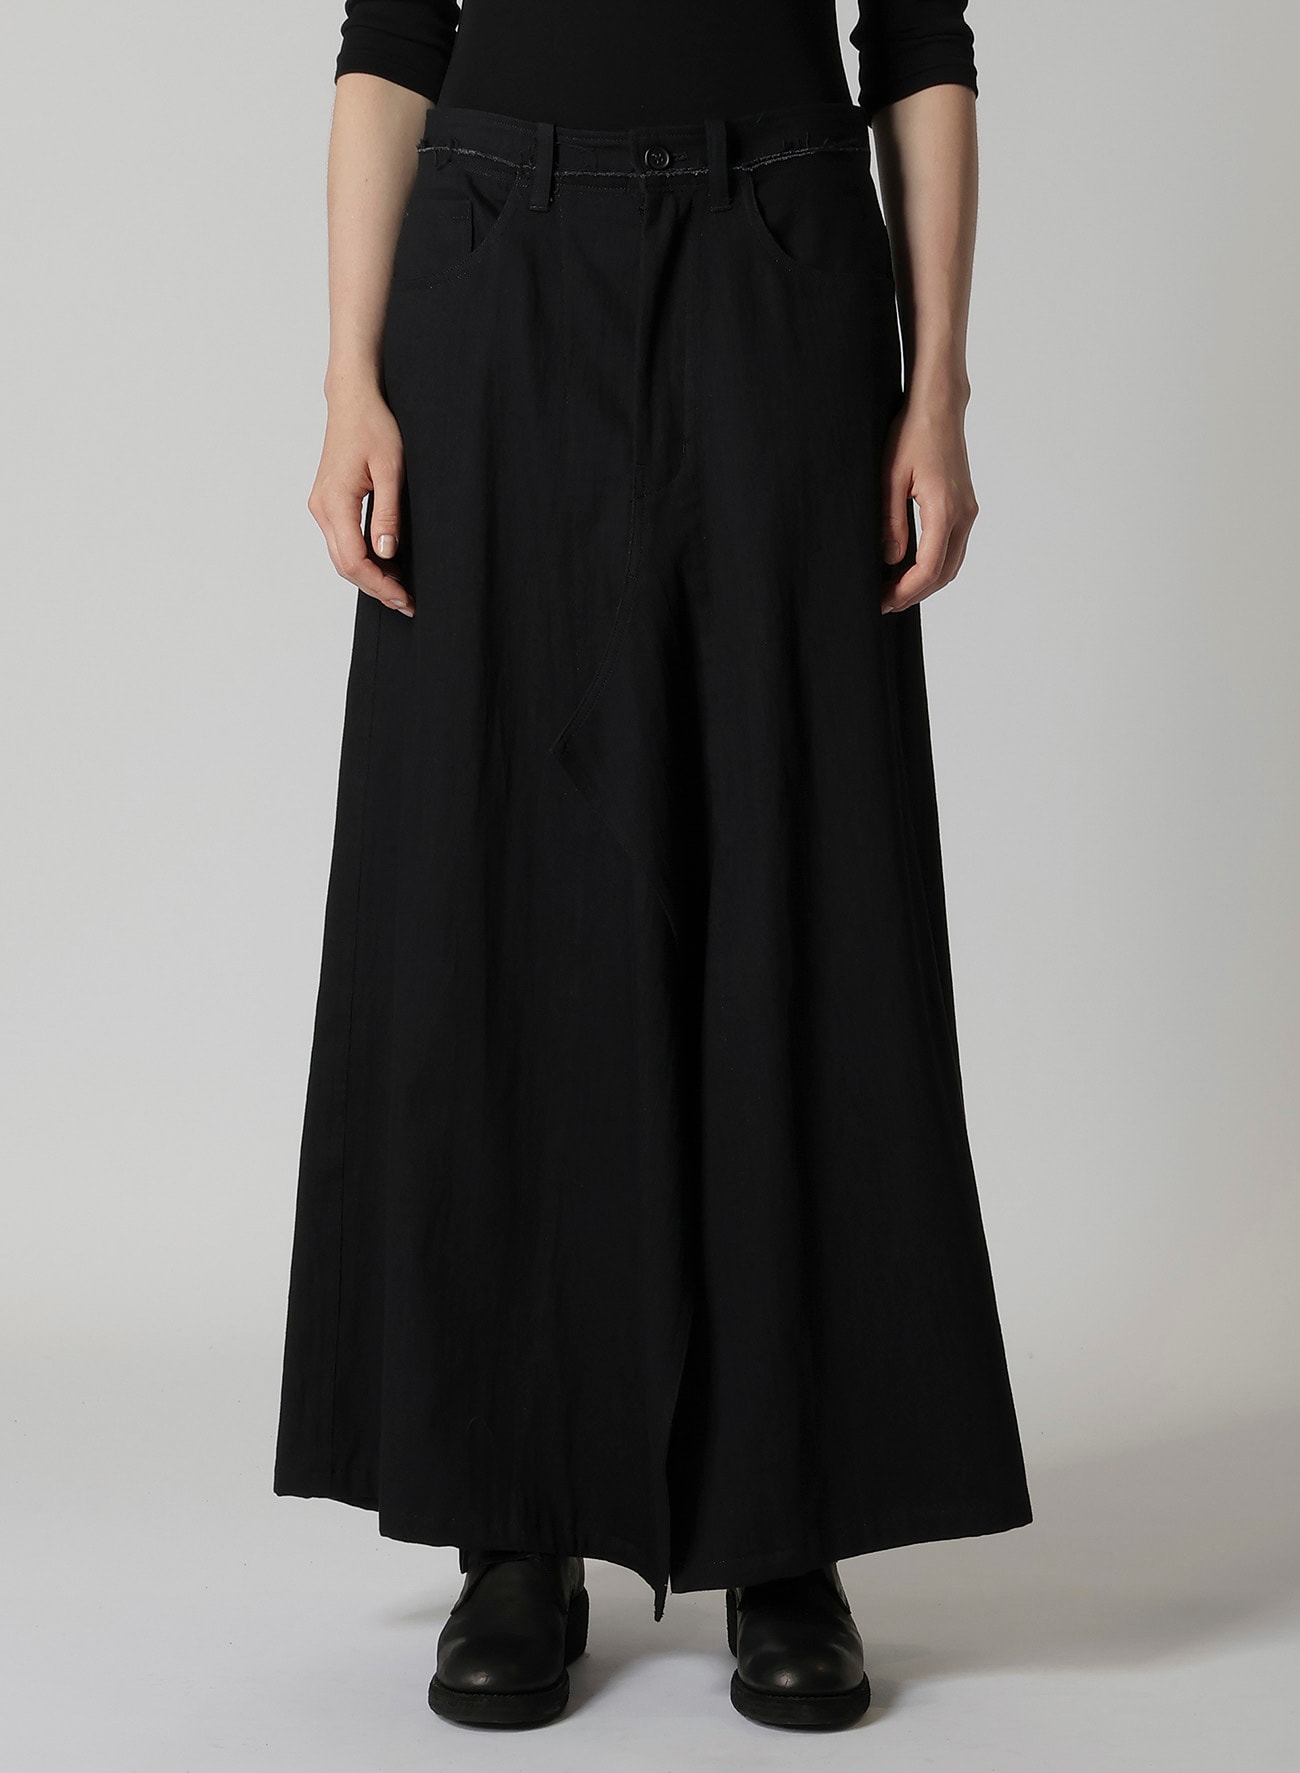 通販公式店 Remake denim skirt | artfive.co.jp